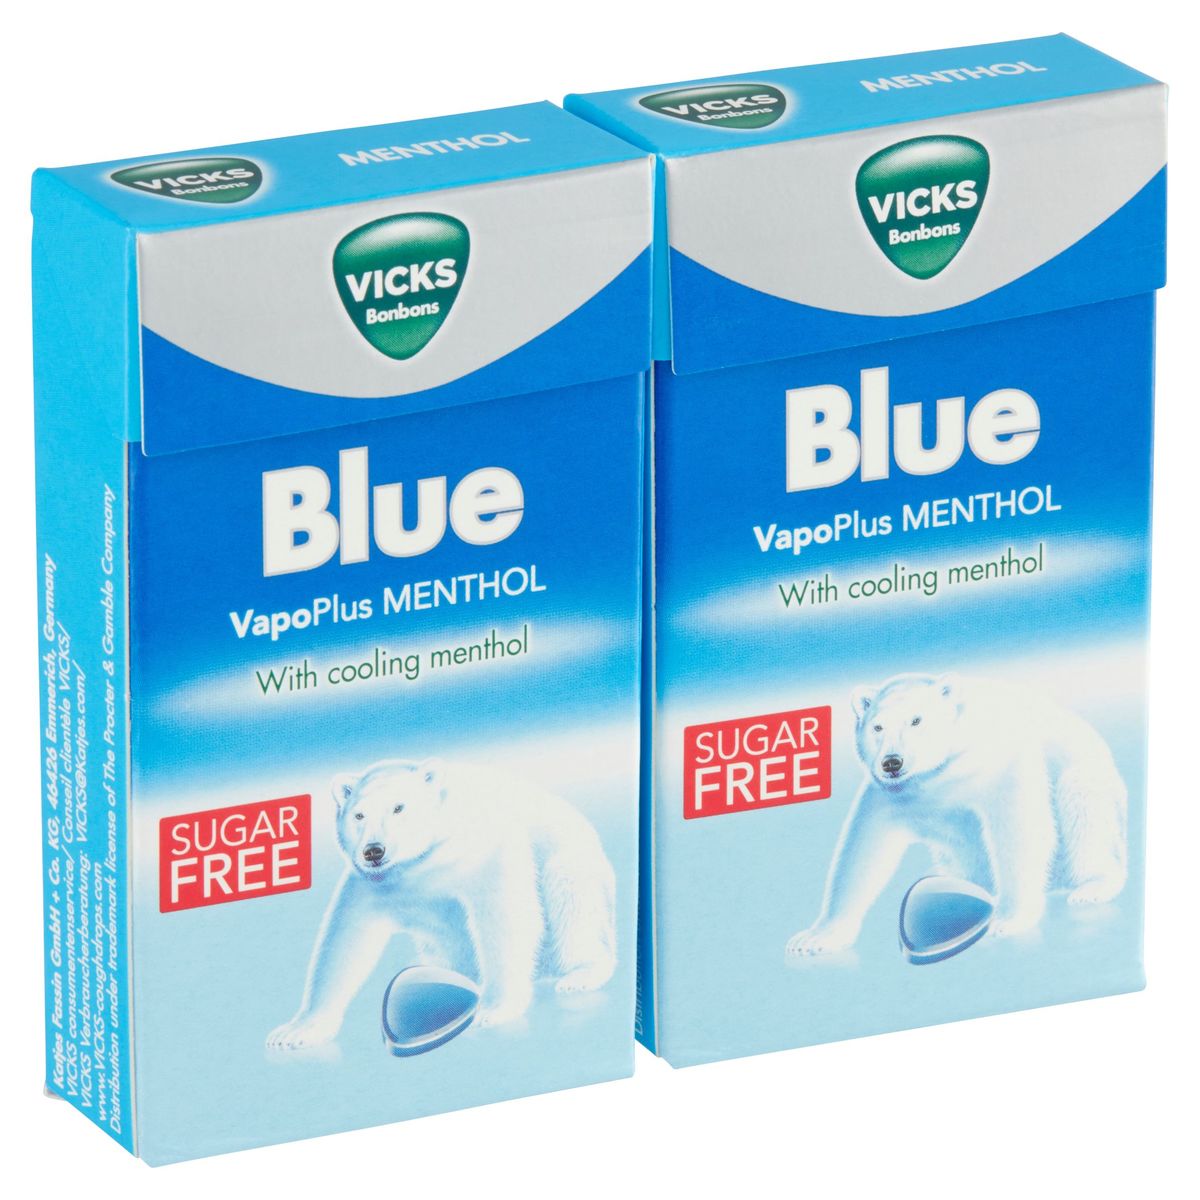 Vicks Bonbons Blue VapoPlus Menthol Sugar Free 2 x 40 g